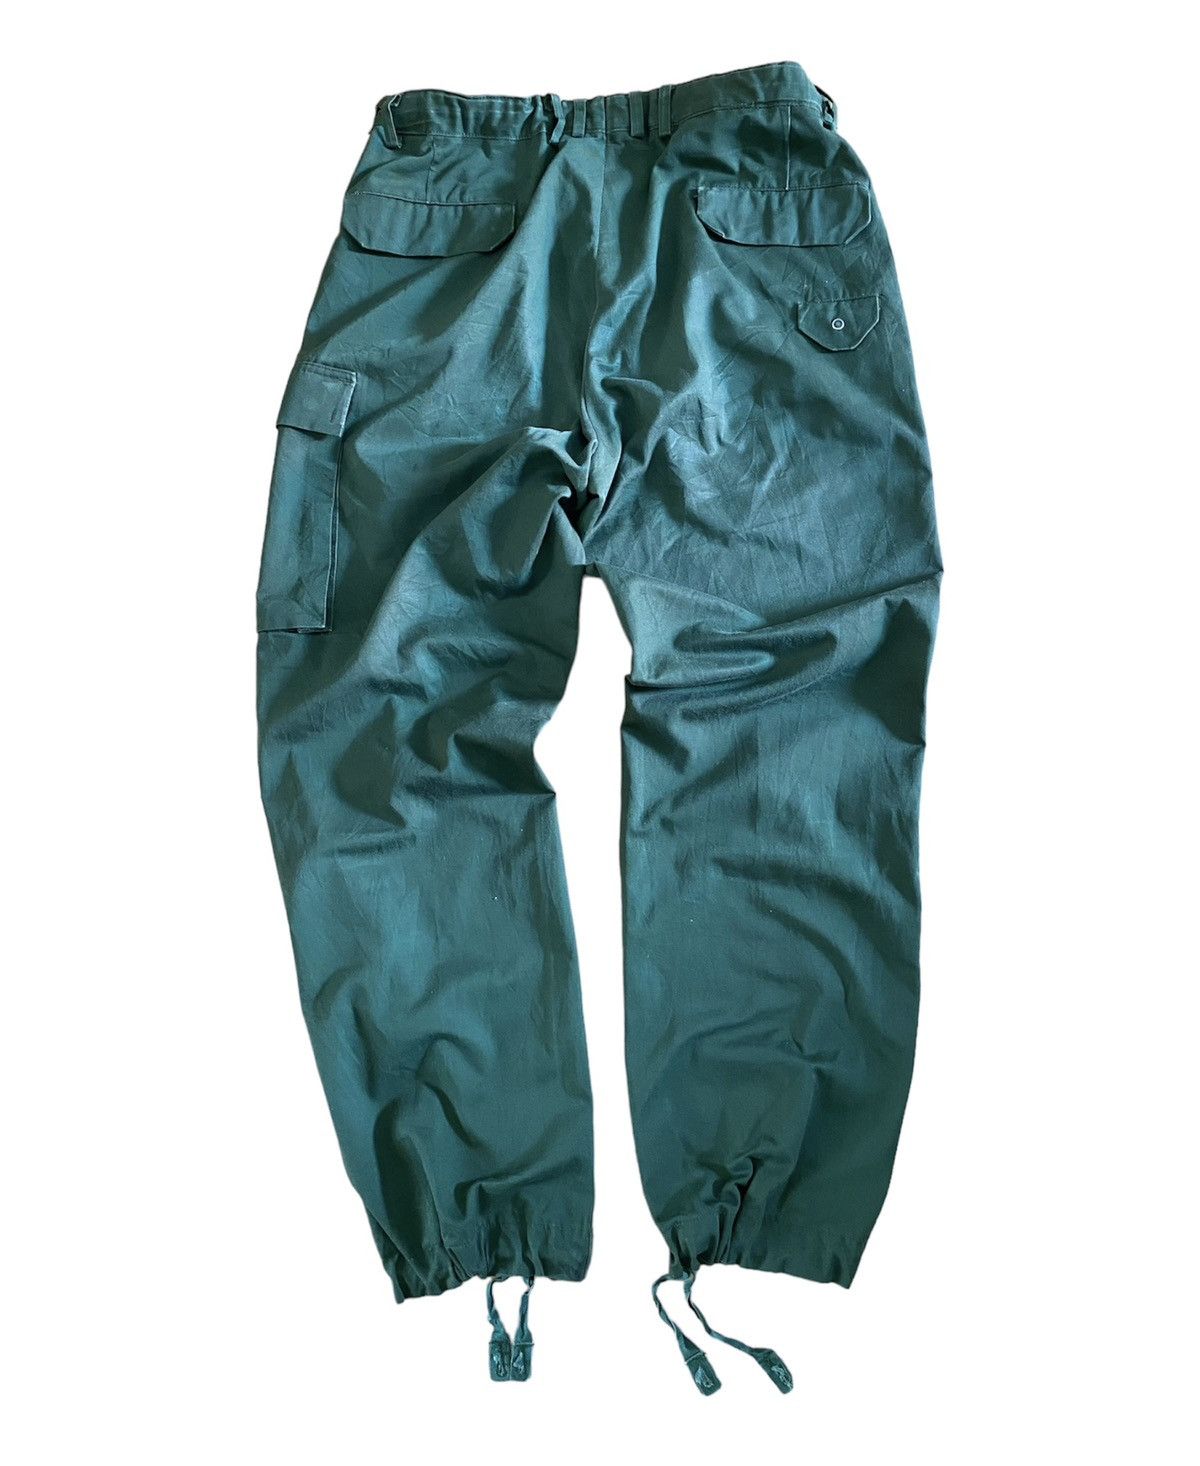 Vintage 1880s Germany Military BUND Wolfhagener Kleiderfabrik pants Size US 34 / EU 50 - 2 Preview